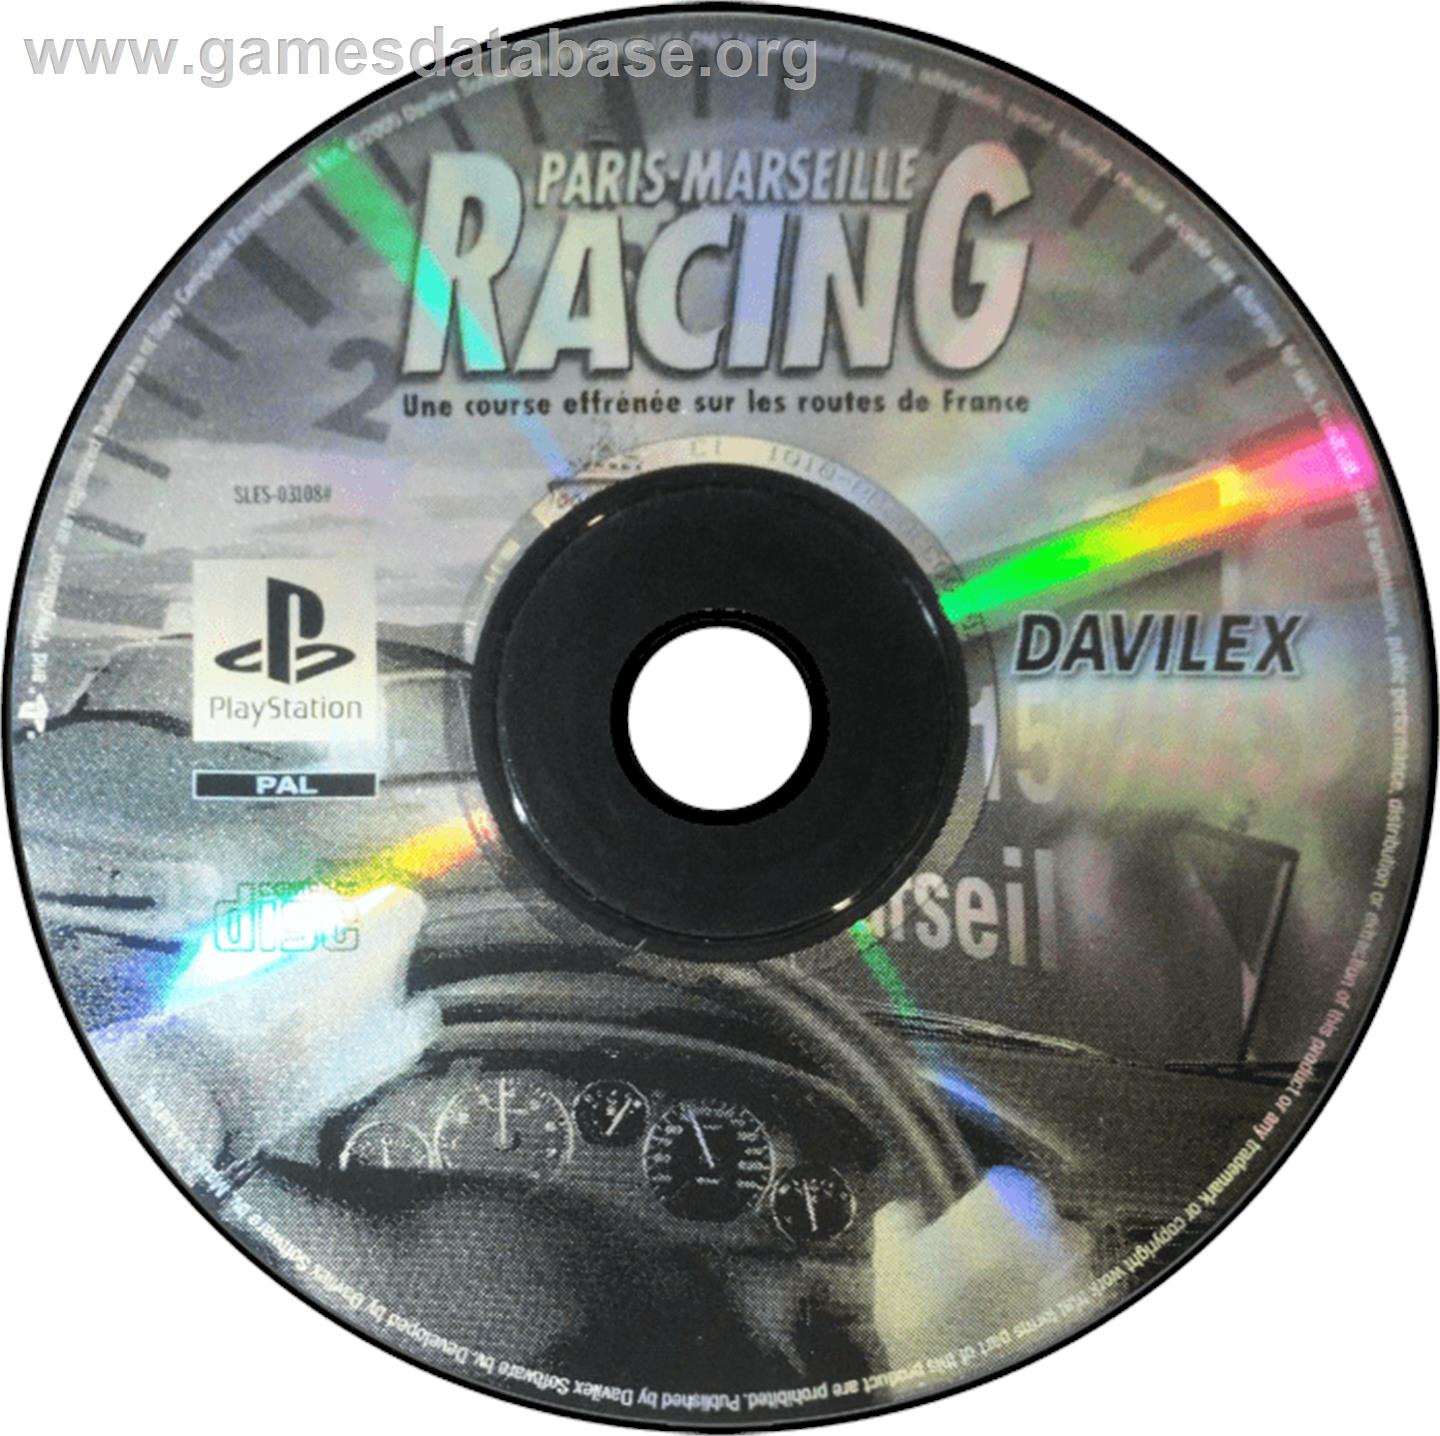 Paris-Marseille Racing - Sony Playstation - Artwork - Disc